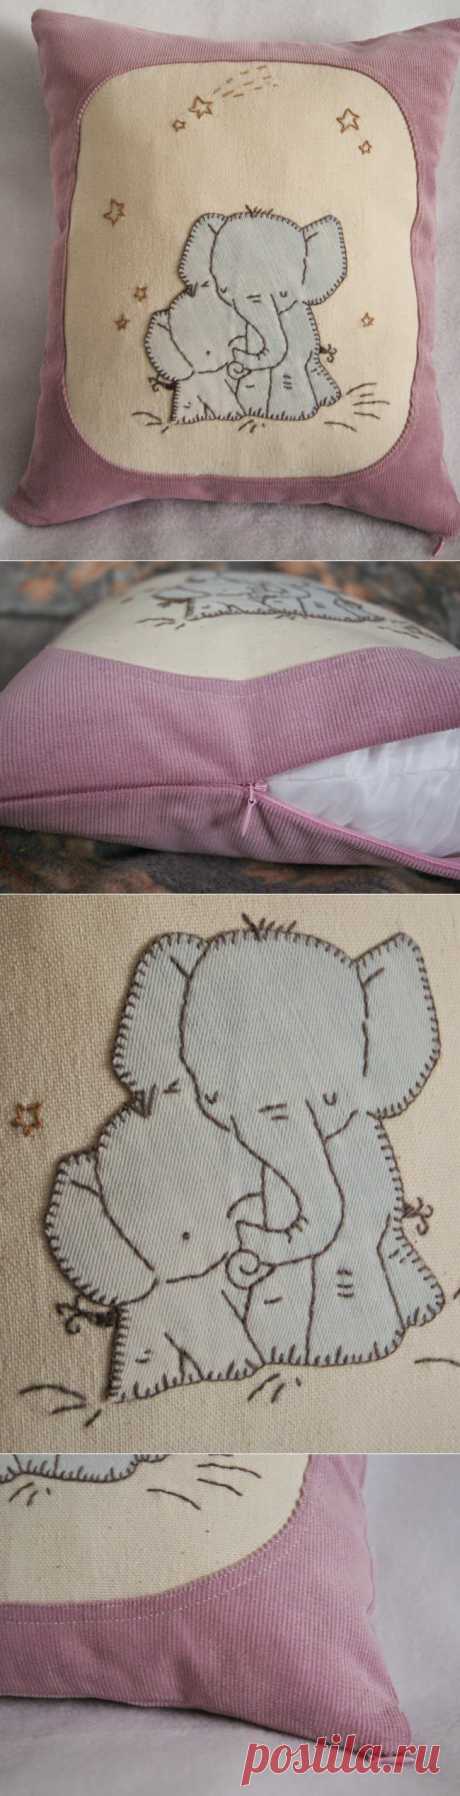 Вельветовая подушка с семейкой слоников. Pillow with elephant family applique based on Kit Chase`s illustration|Шнуристика